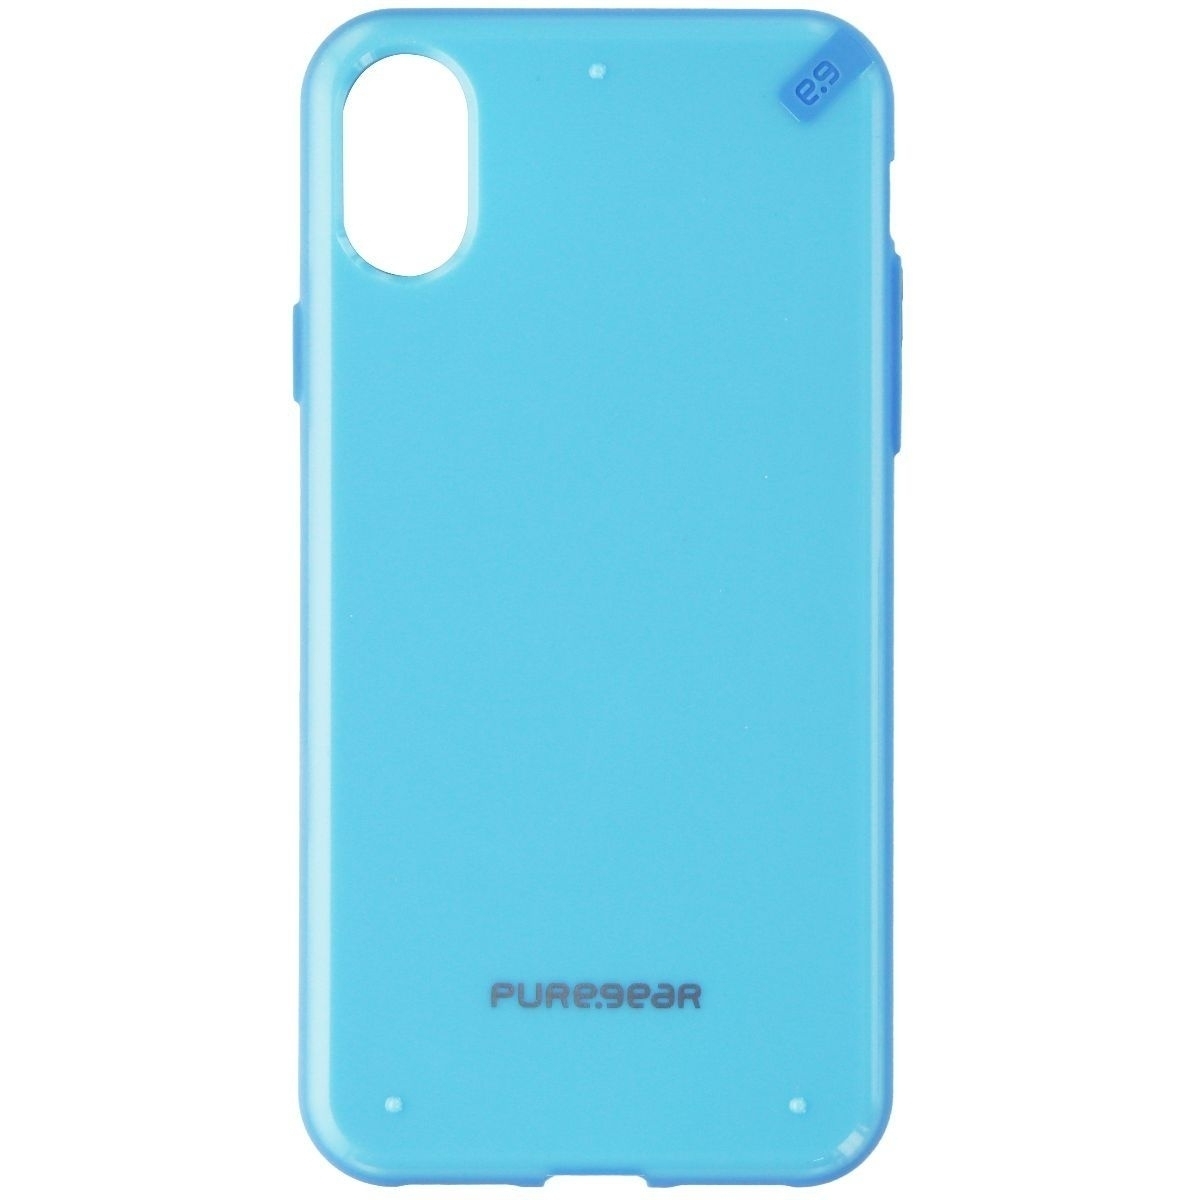 PureGear Slim Shell Hard Case For Apple IPhone Xs / X - Sky Blue